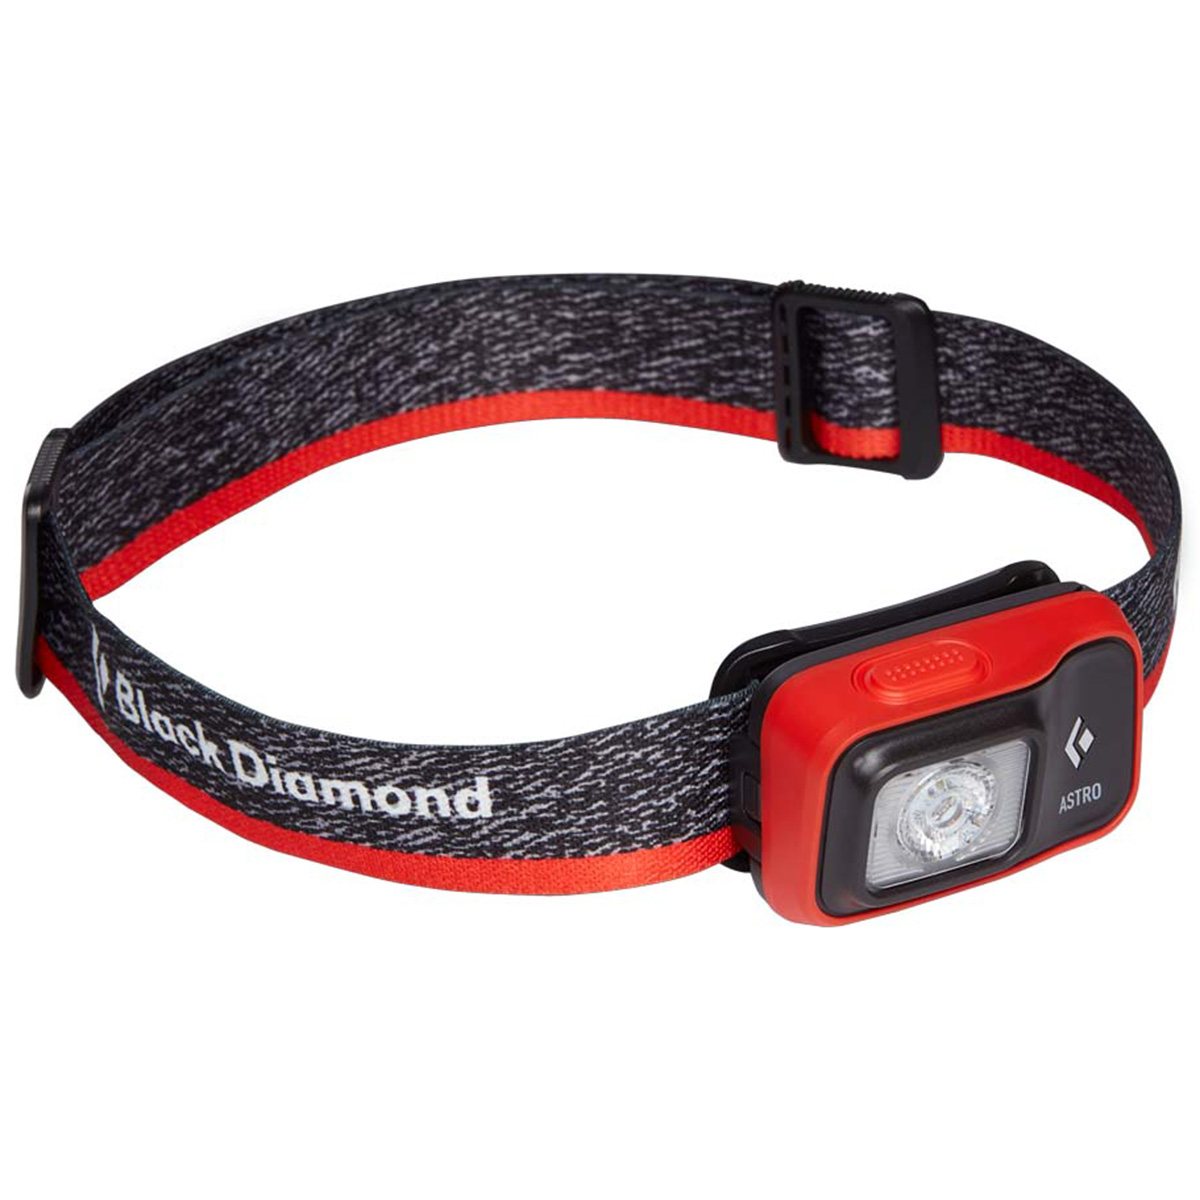 Black Diamond Astro Compact LED Headlamp